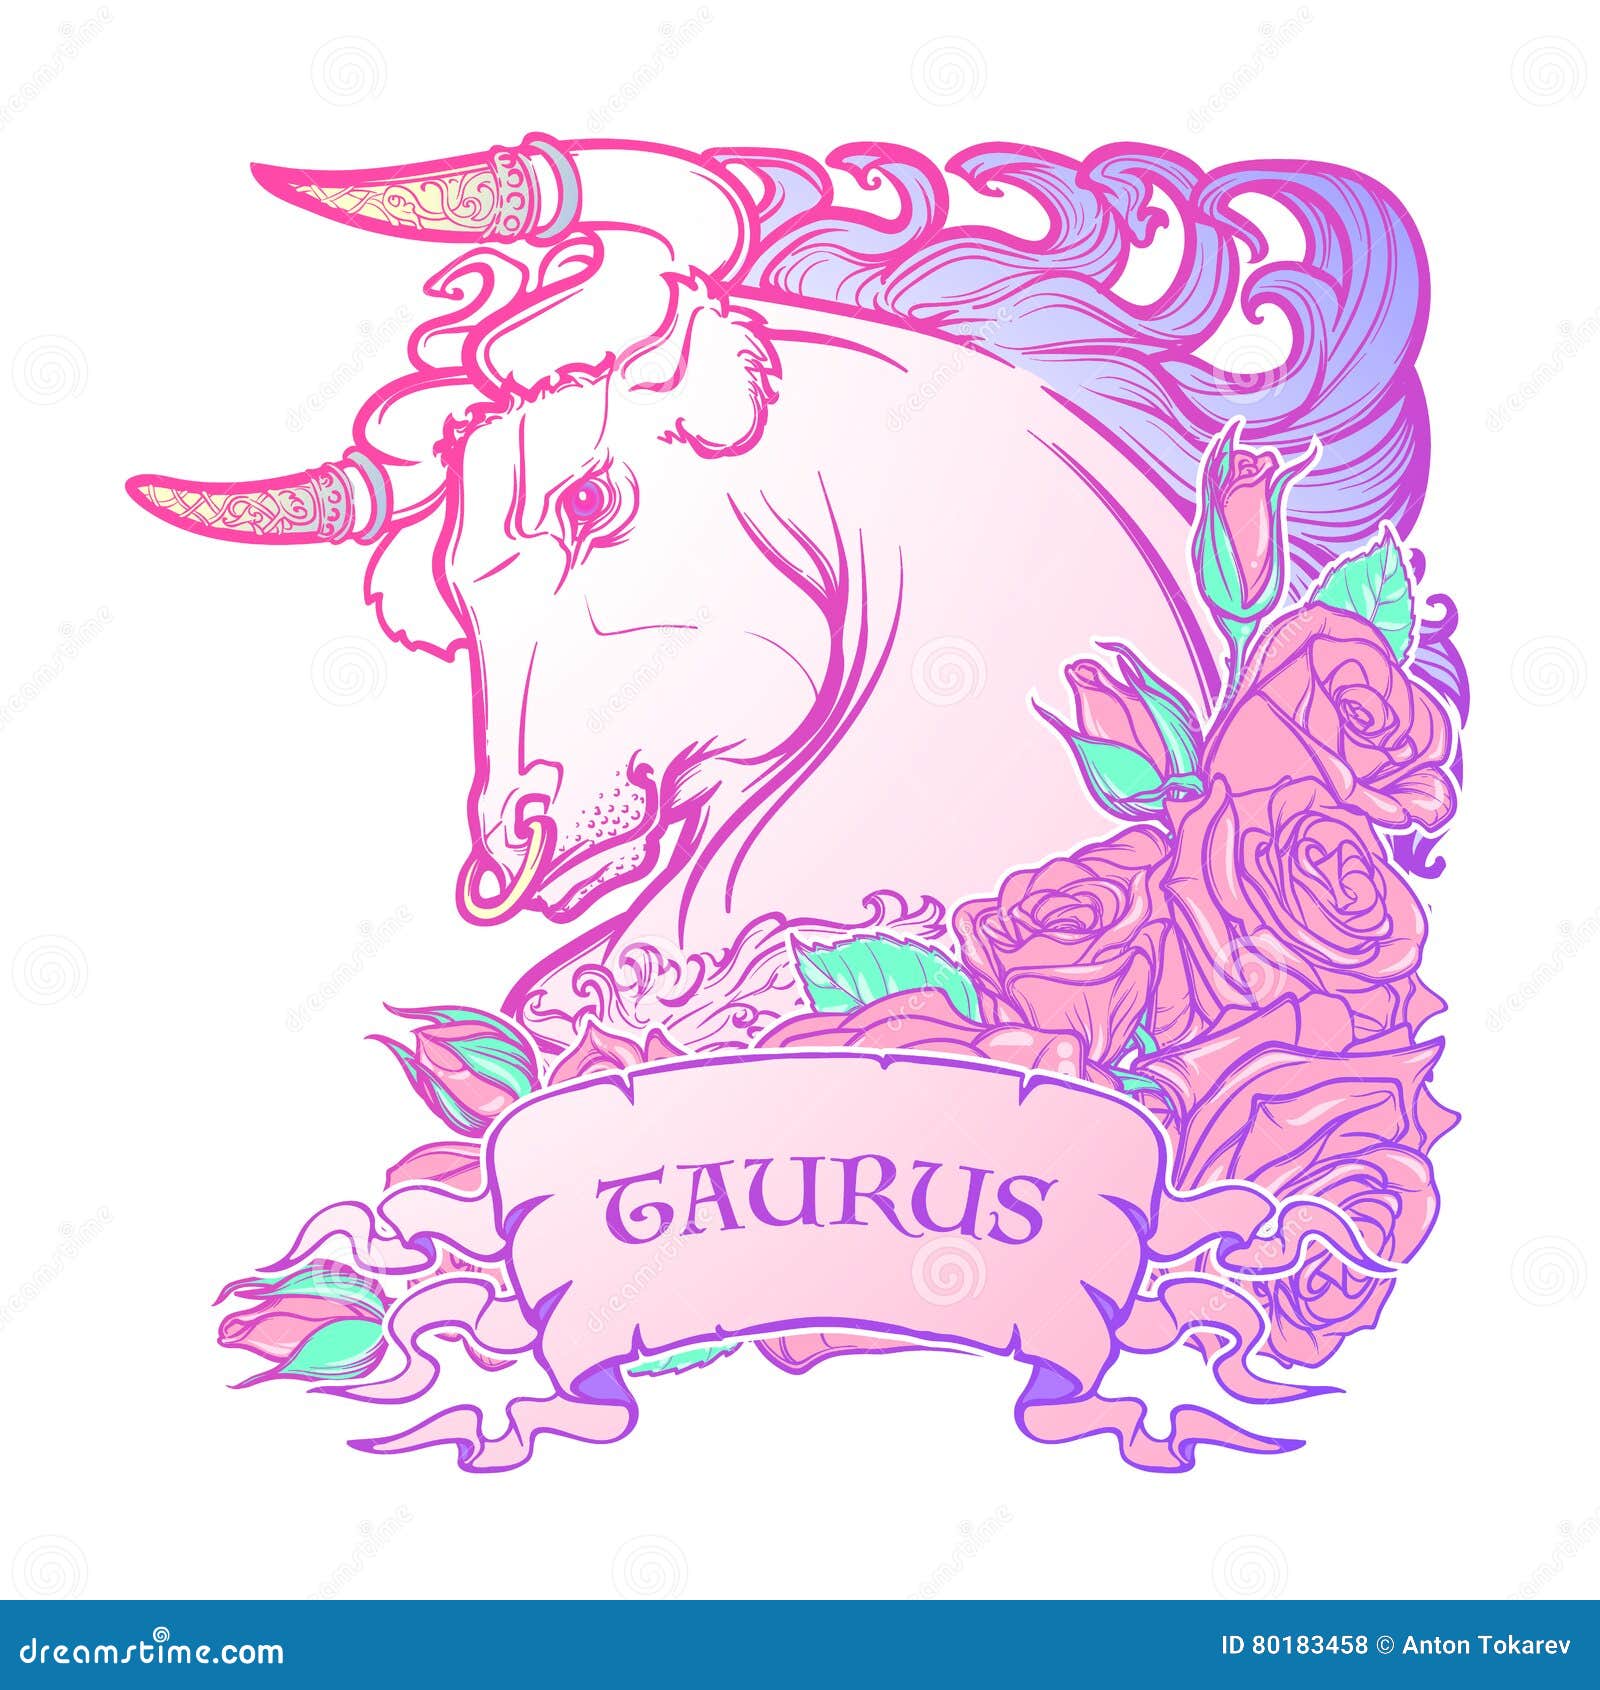 astrological taurus white background zodiac sign decorative frame roses astrology concept art tattoo design sketch 80183458